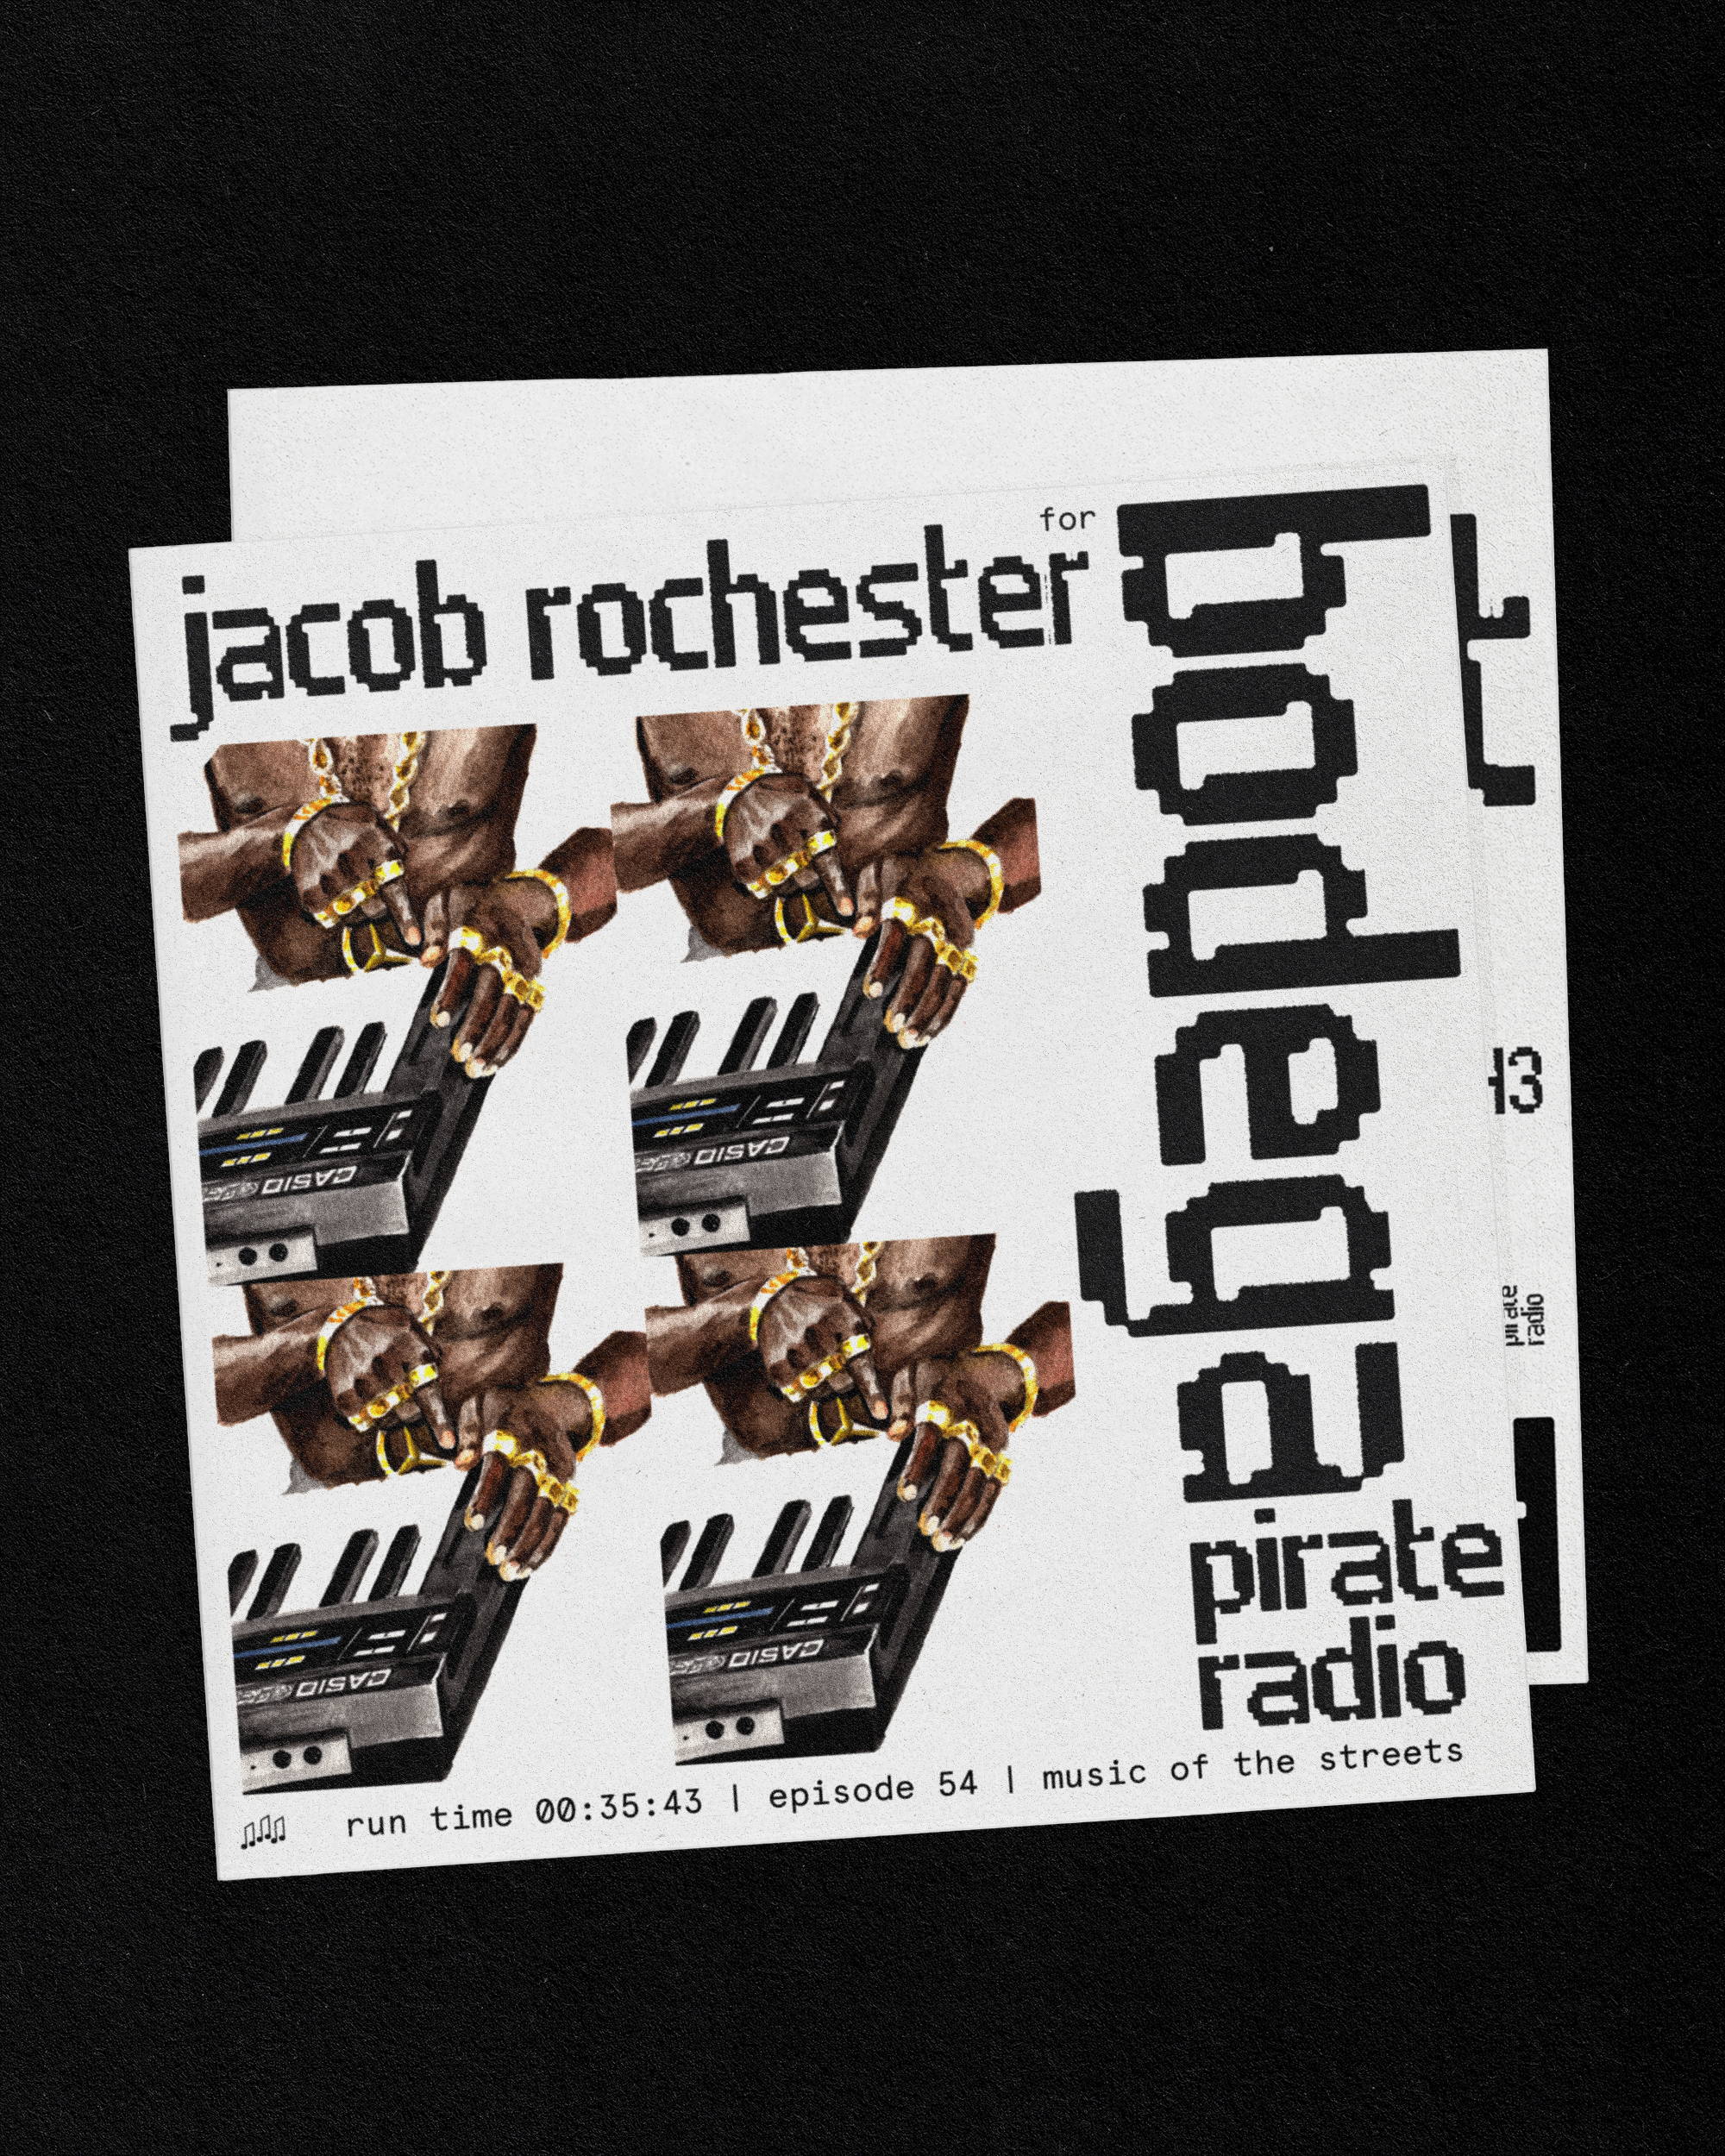 Episode #54: Jacob Rochester